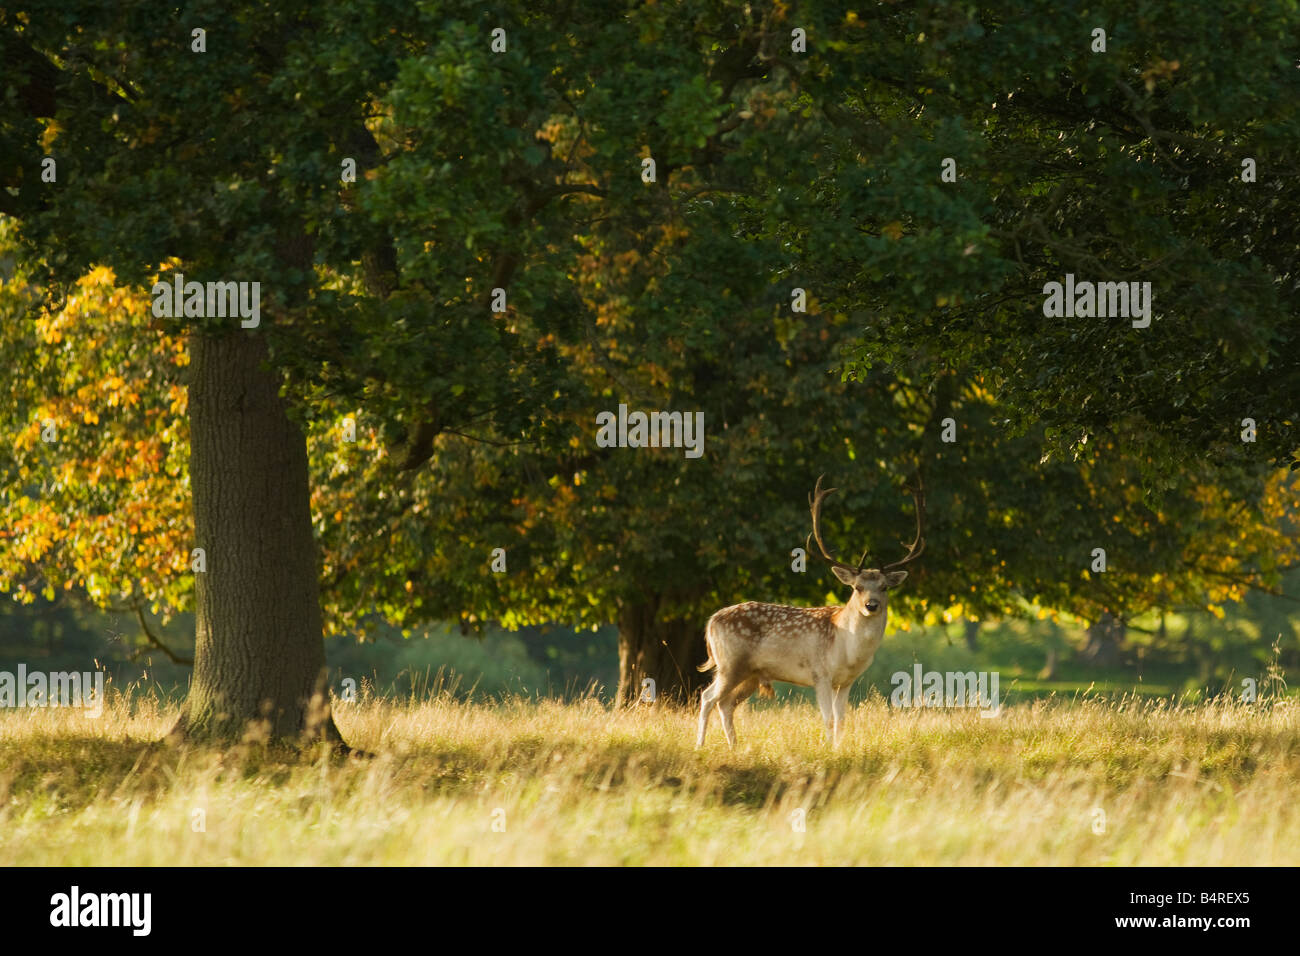 Fallow deer buck grazing in english meadow and woodland Shropshire England UK United Kingdom GB Great Britain British Isles Stock Photo